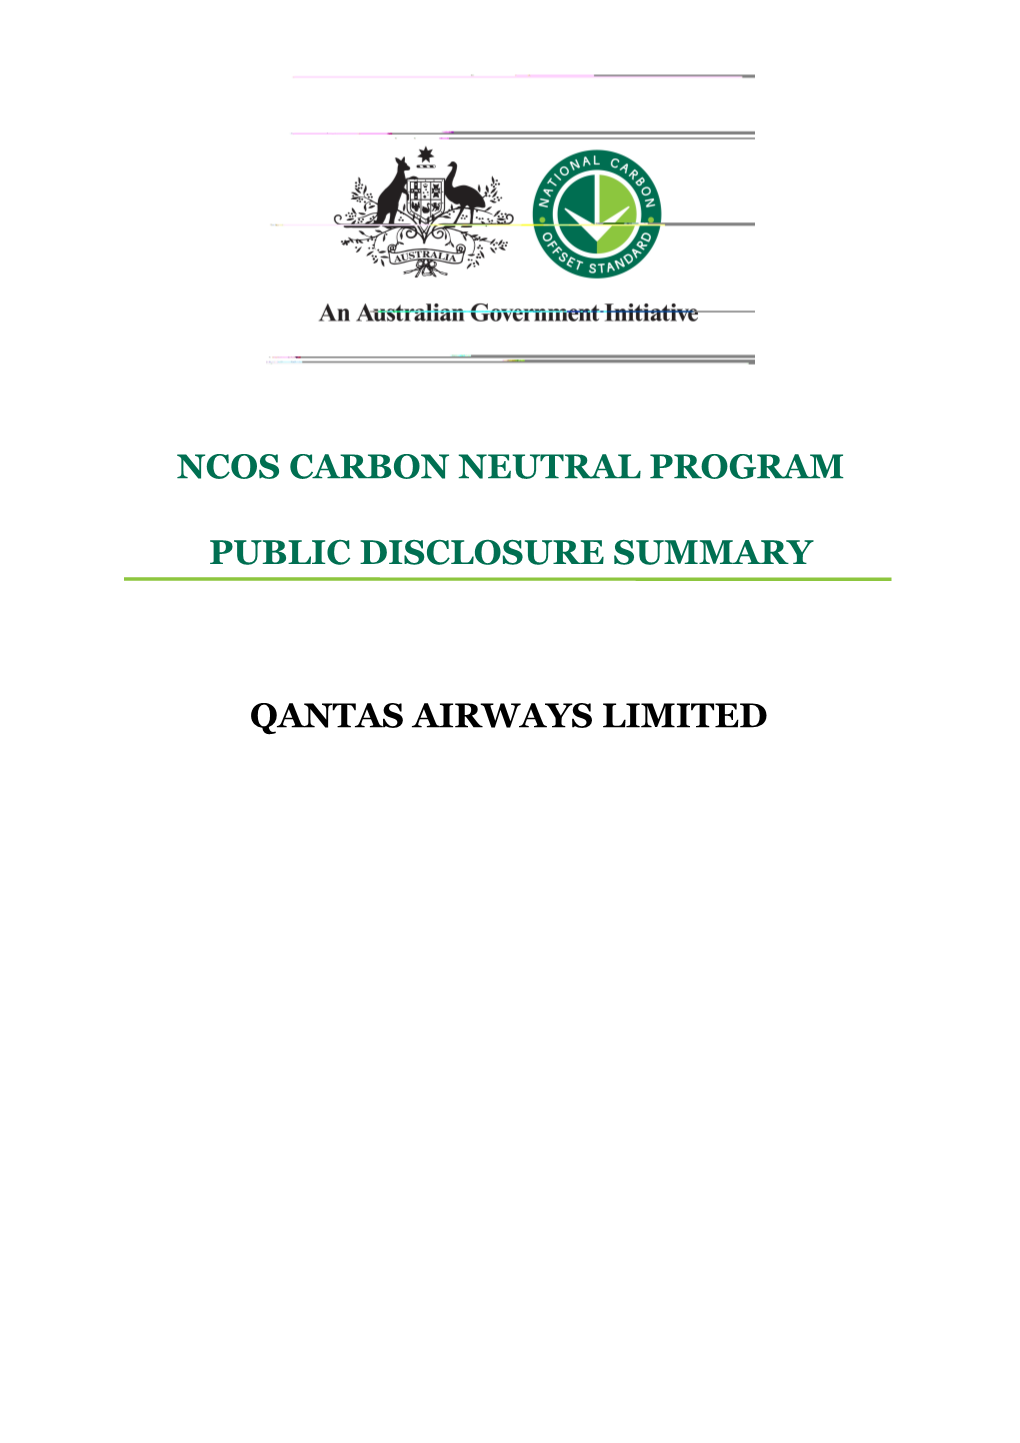 NCOS Carbon Neutral Program - Public Disclosure Summary - Qantas 2011-12